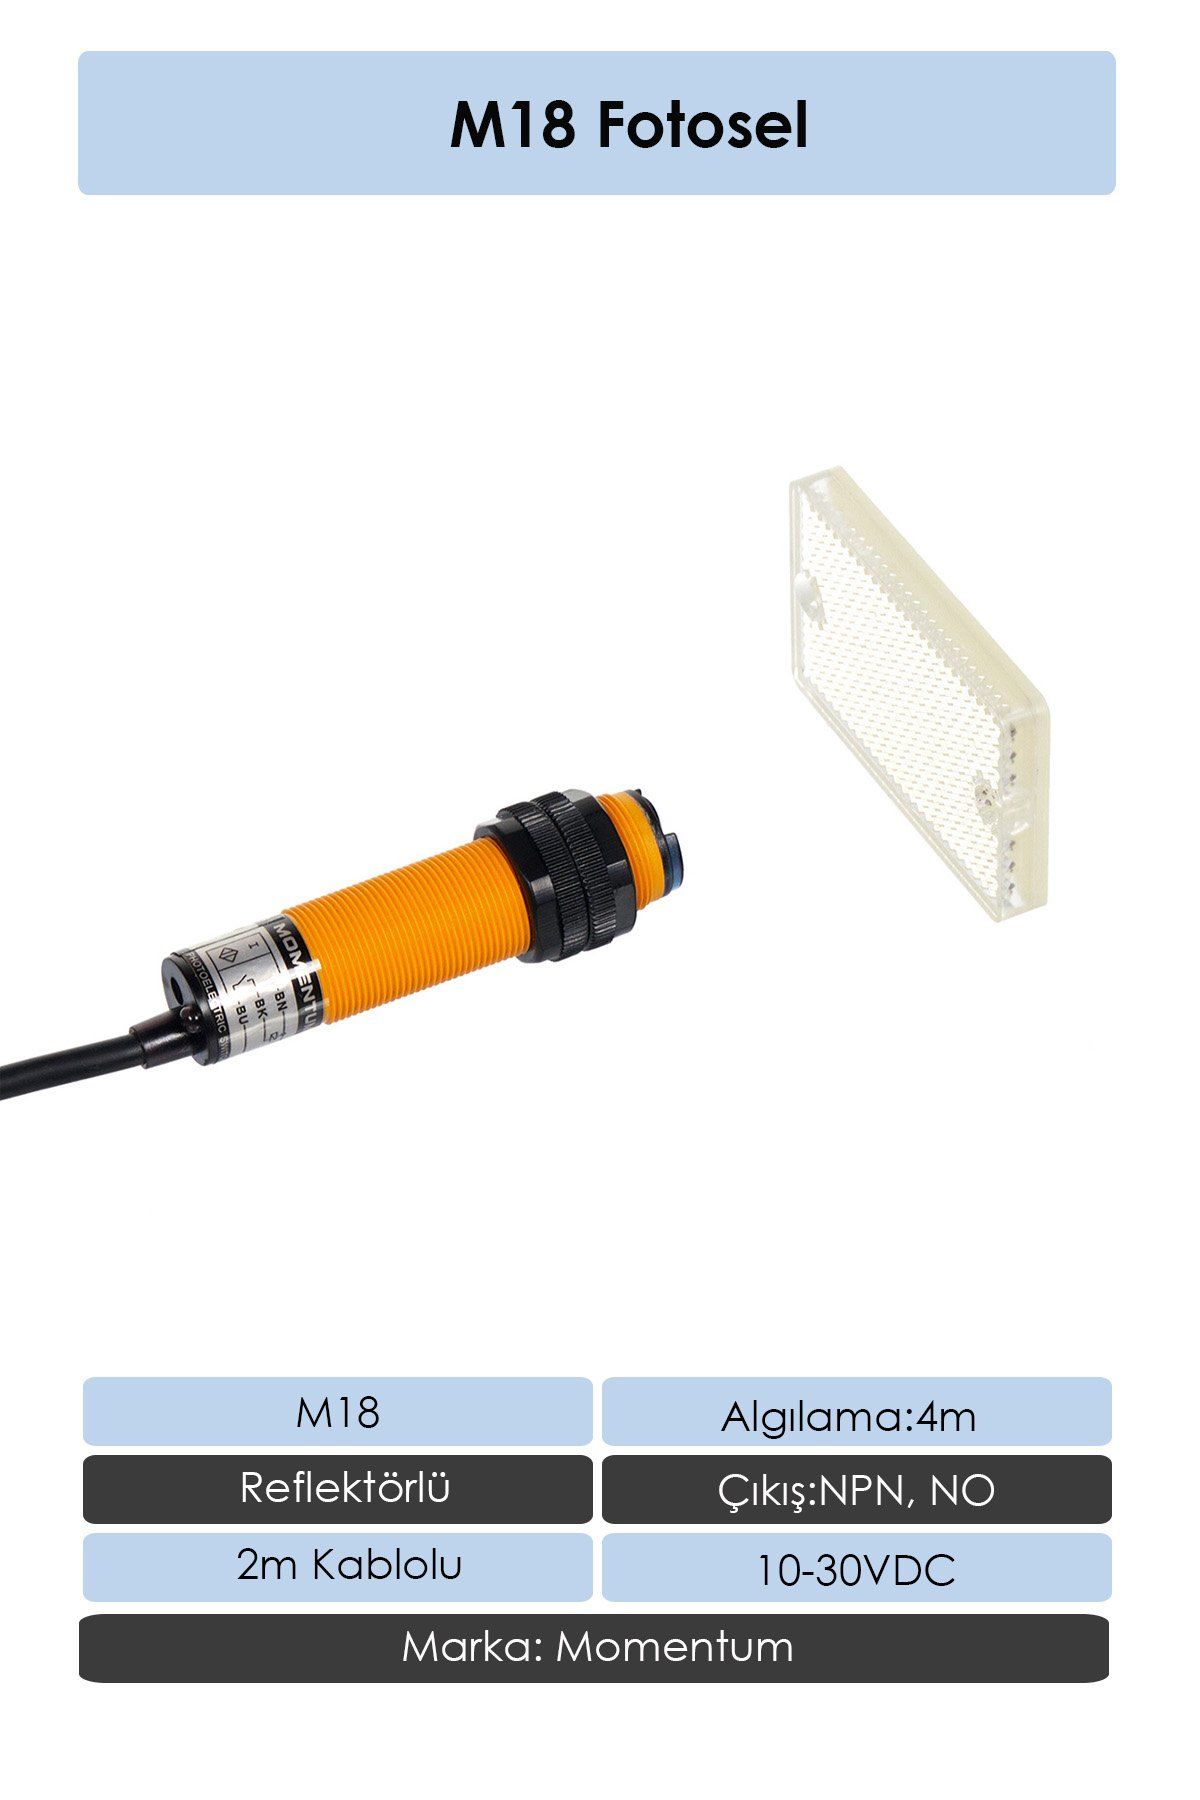 Momentum Fotosel M18 4m Reflektörlü 2m Kablo NPN NO G18-3B4NA